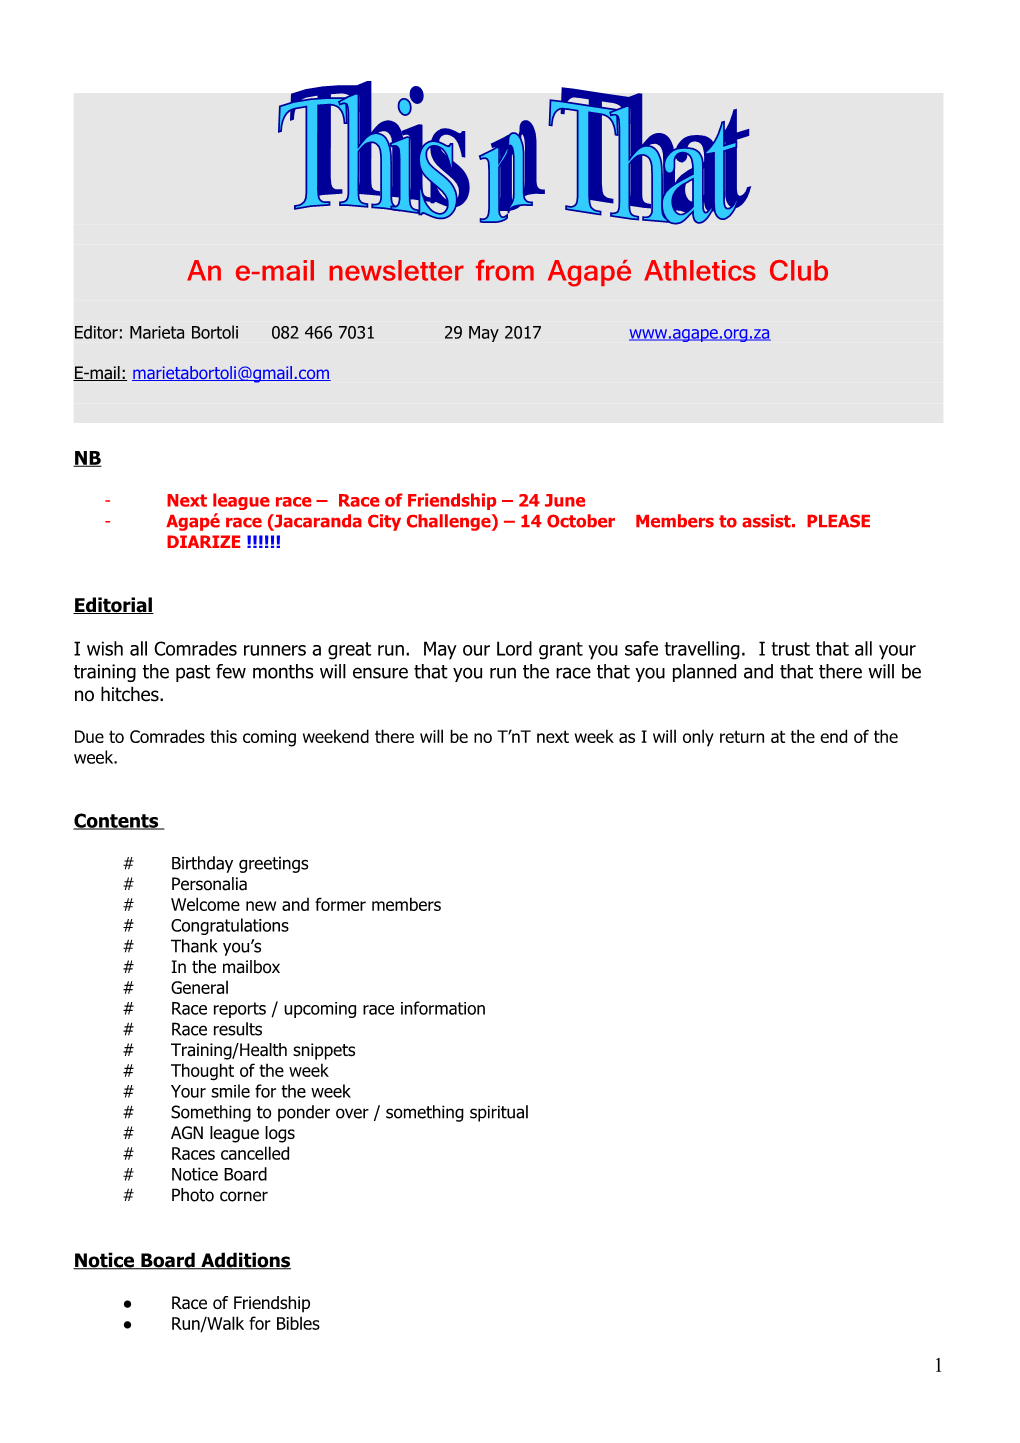 An E-Mail Newsletter from Agapé Athletics Club